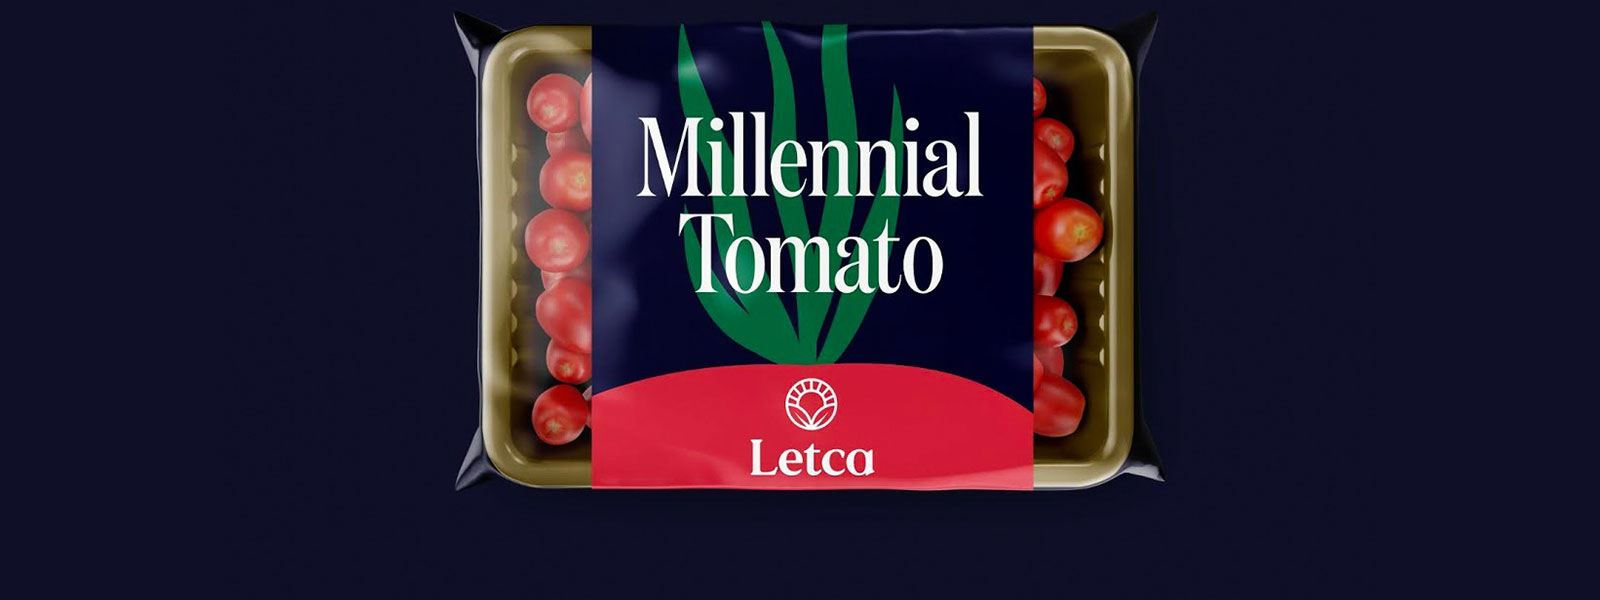 Produse Rosii slide show bio Letca Millennial Tomato